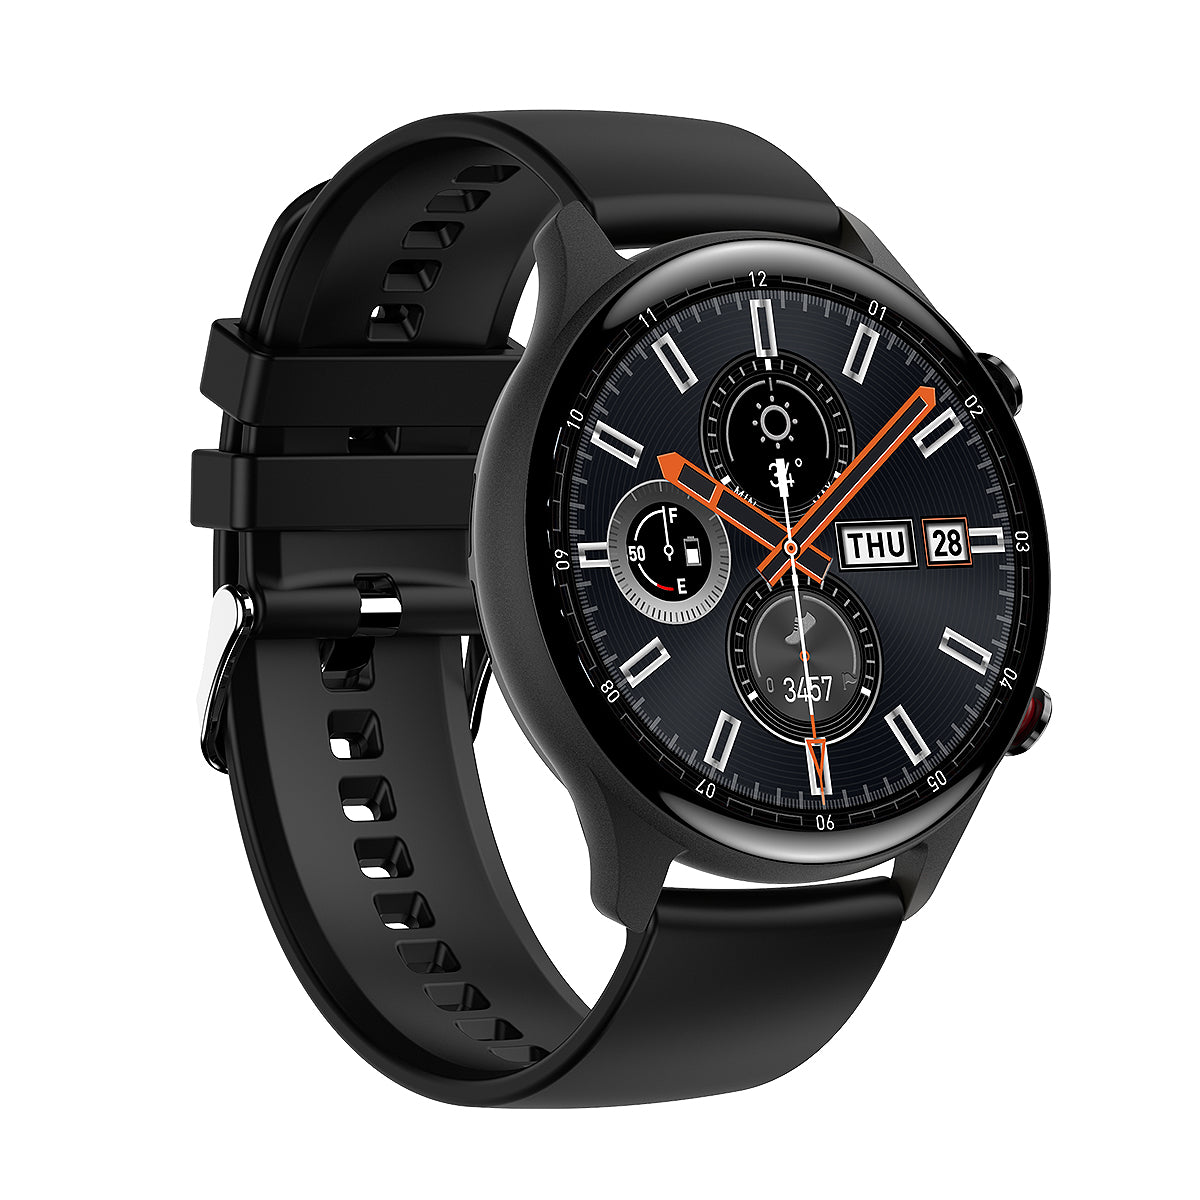 SK10 smartwatch 1.32inch full touch screen waterproof sport gps smart watch with heart rate monitor - MackTechBiz